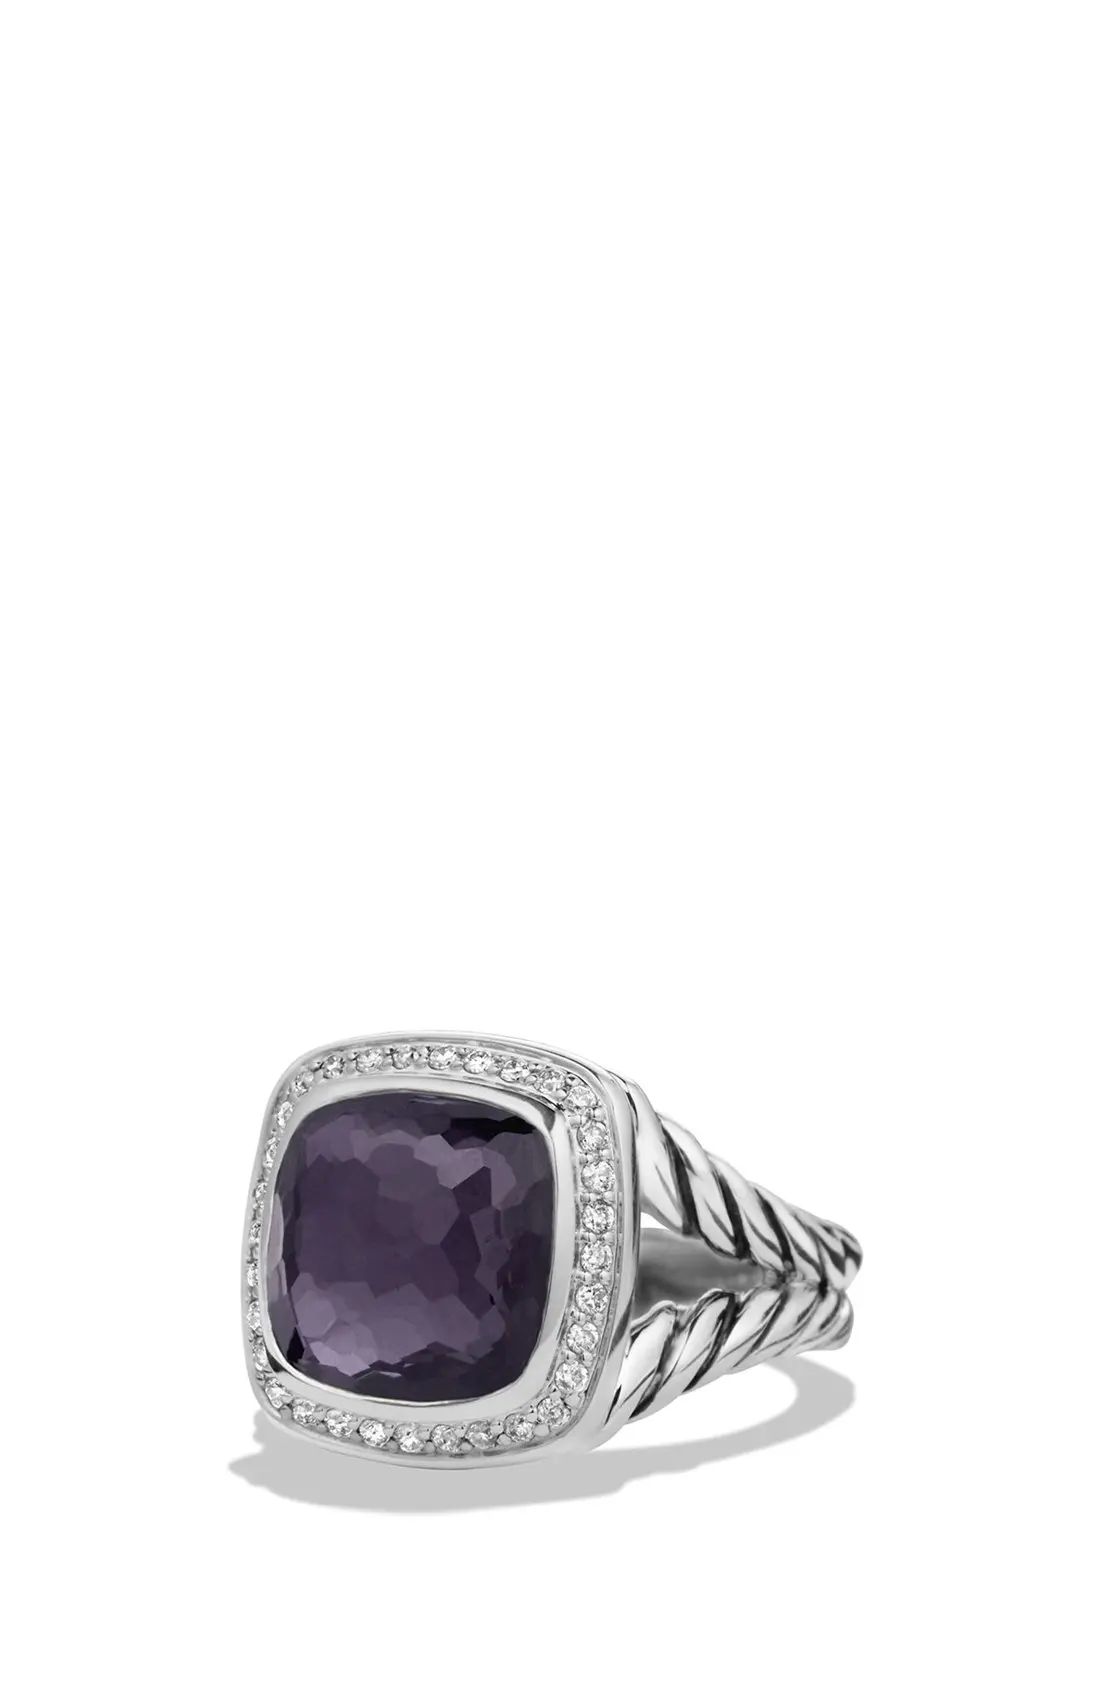 David Yurman 'Albion' Ring with Semiprecious Stone and Diamonds | Nordstrom